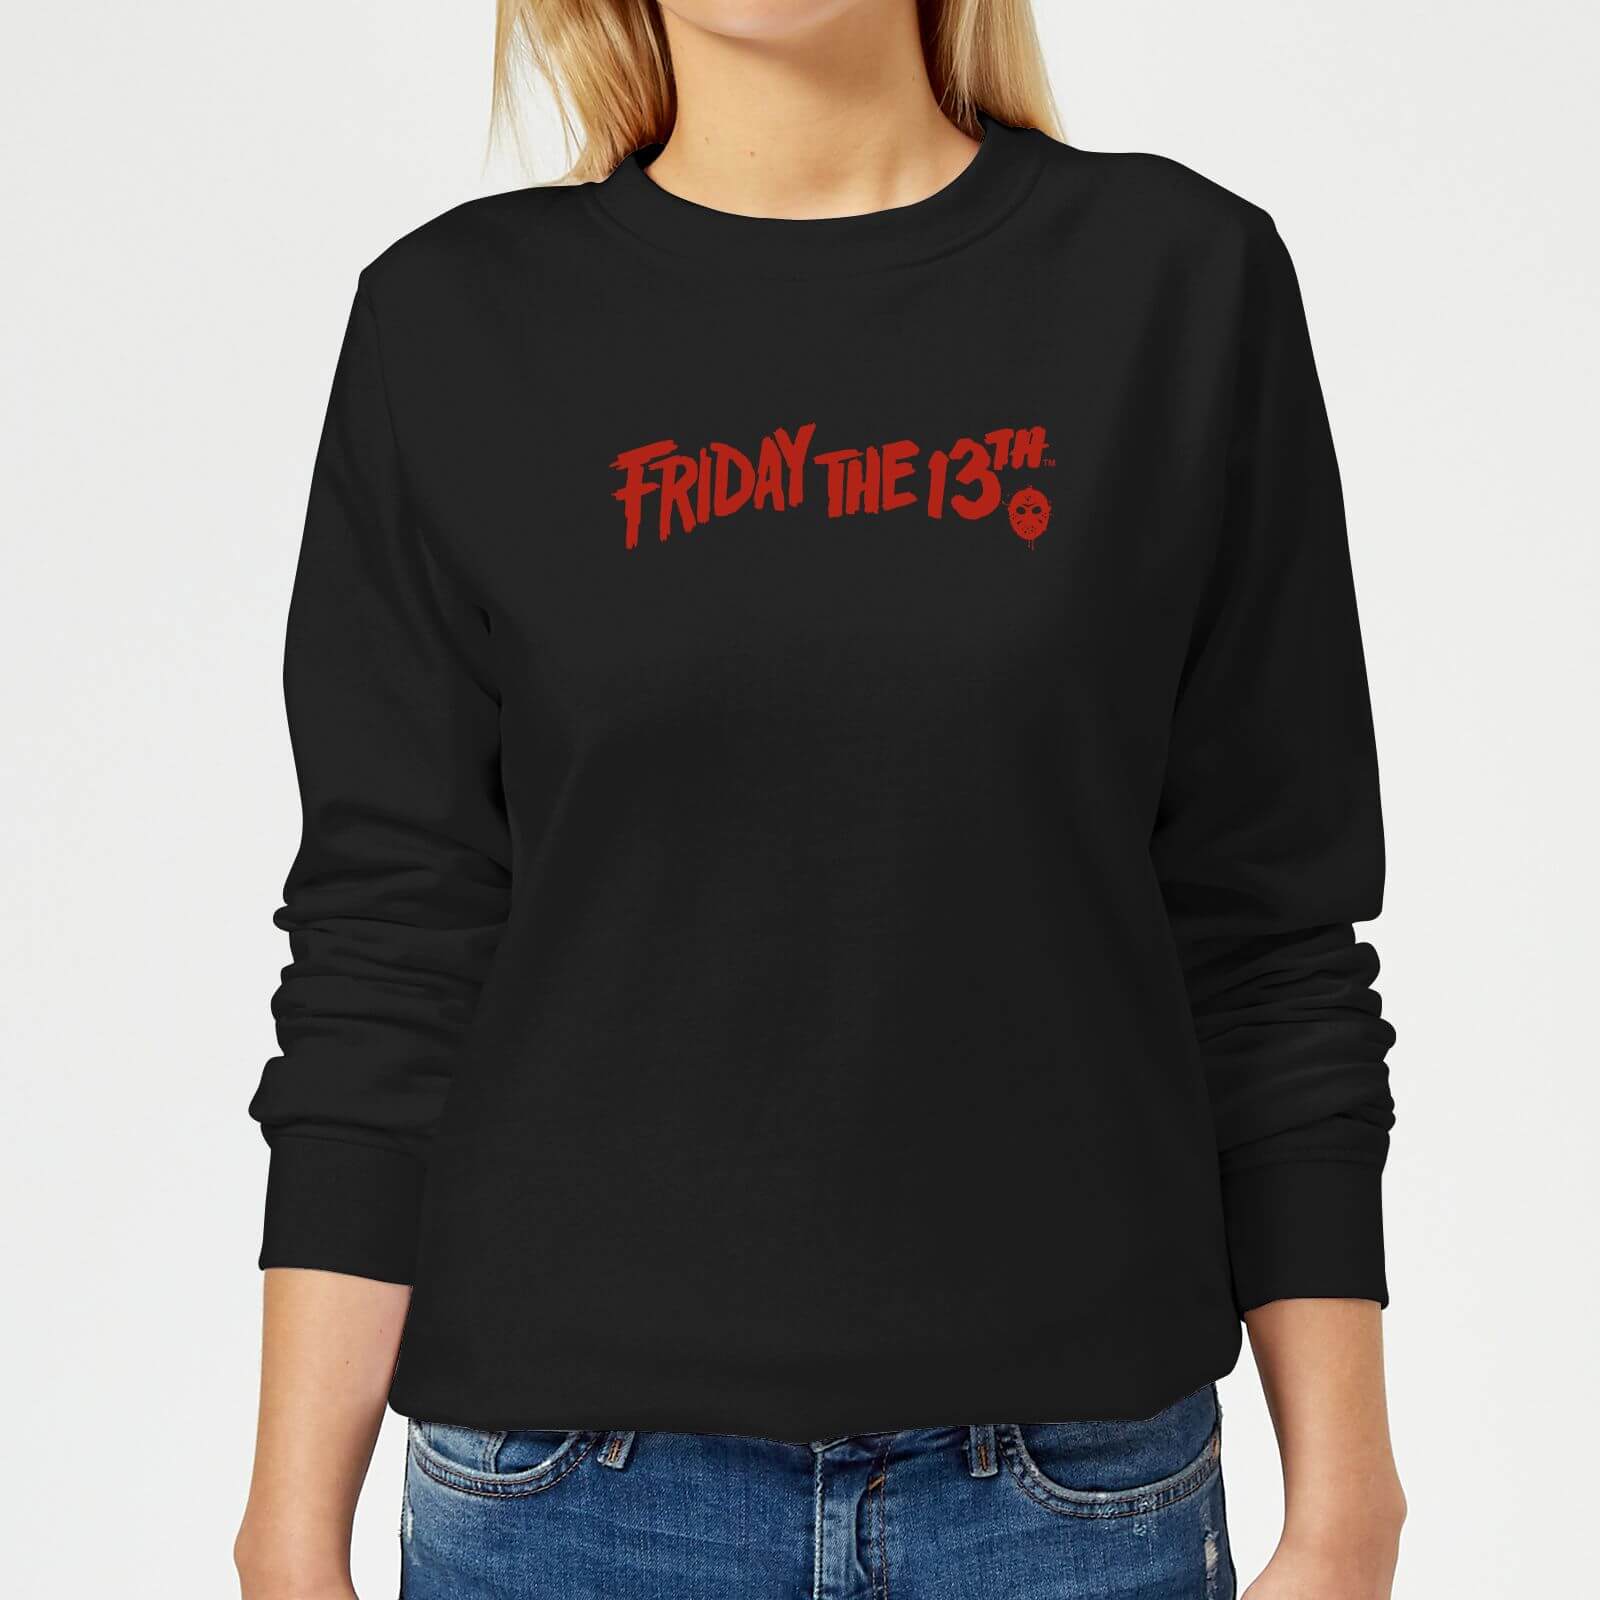 Friday the 13th Logo Women's Sweatshirt - Black - XS - Black